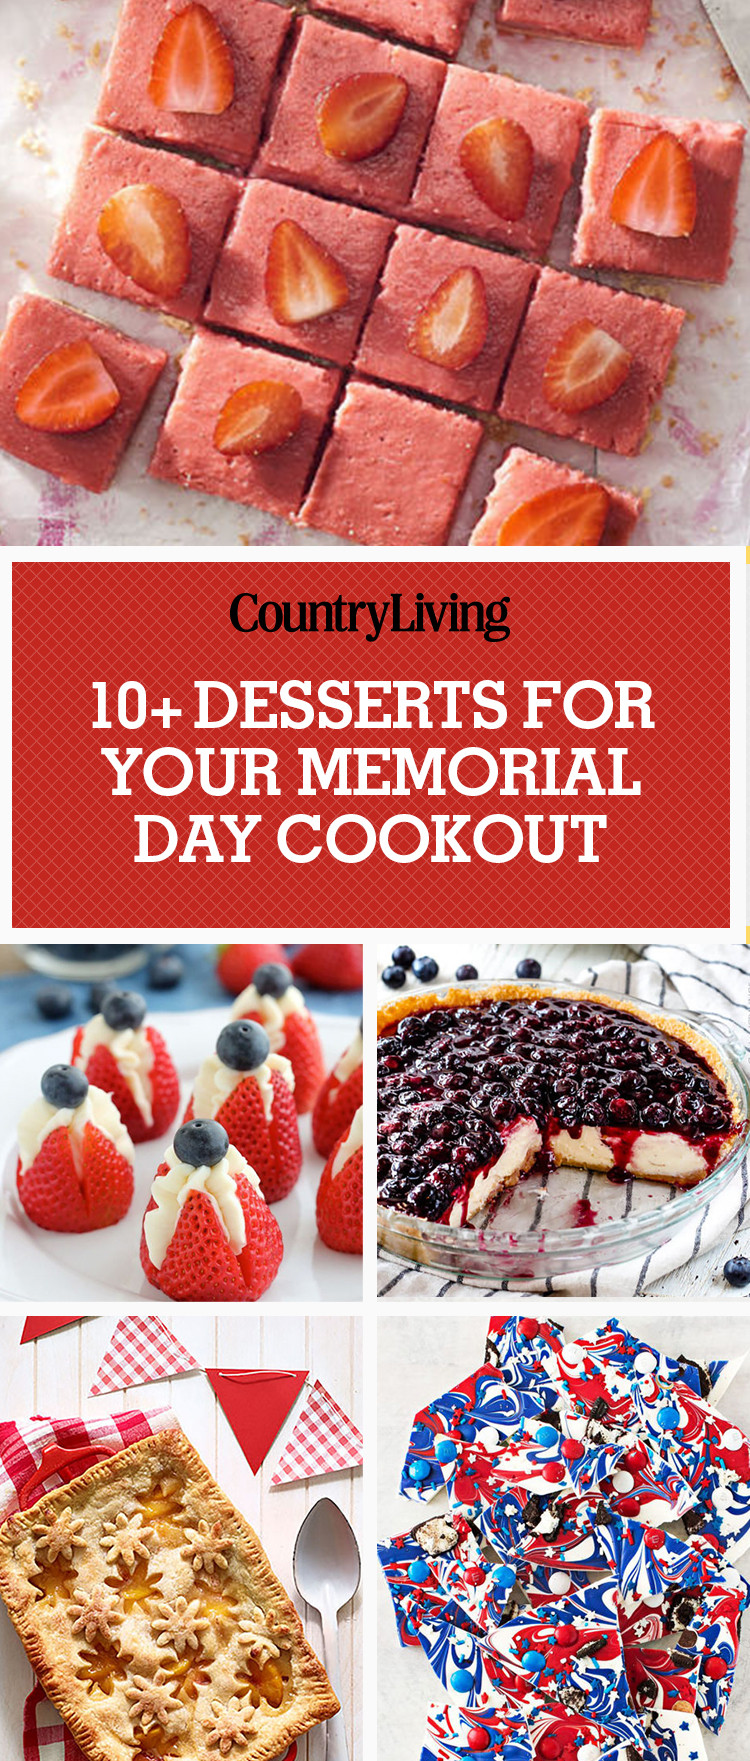 Memorial Day Desserts Ideas
 13 Easy Memorial Day Desserts Best Recipes for Memorial